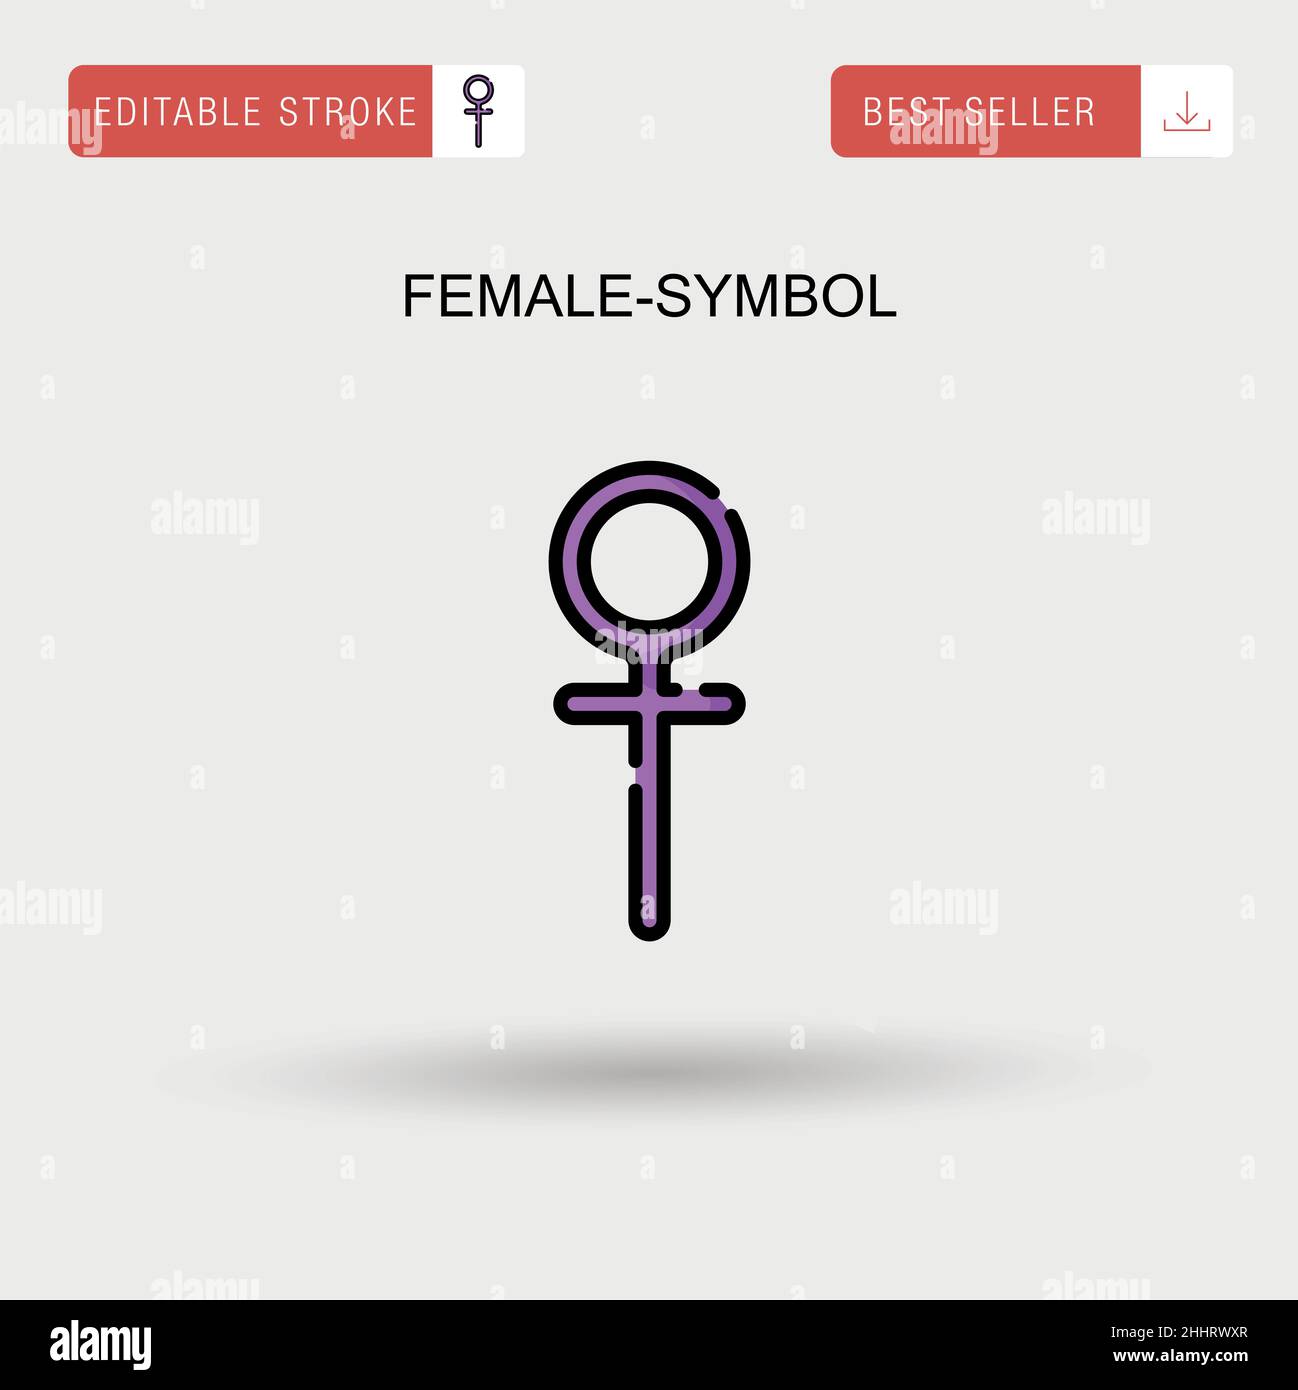 Female-symbol Simple vector icon. Stock Vector